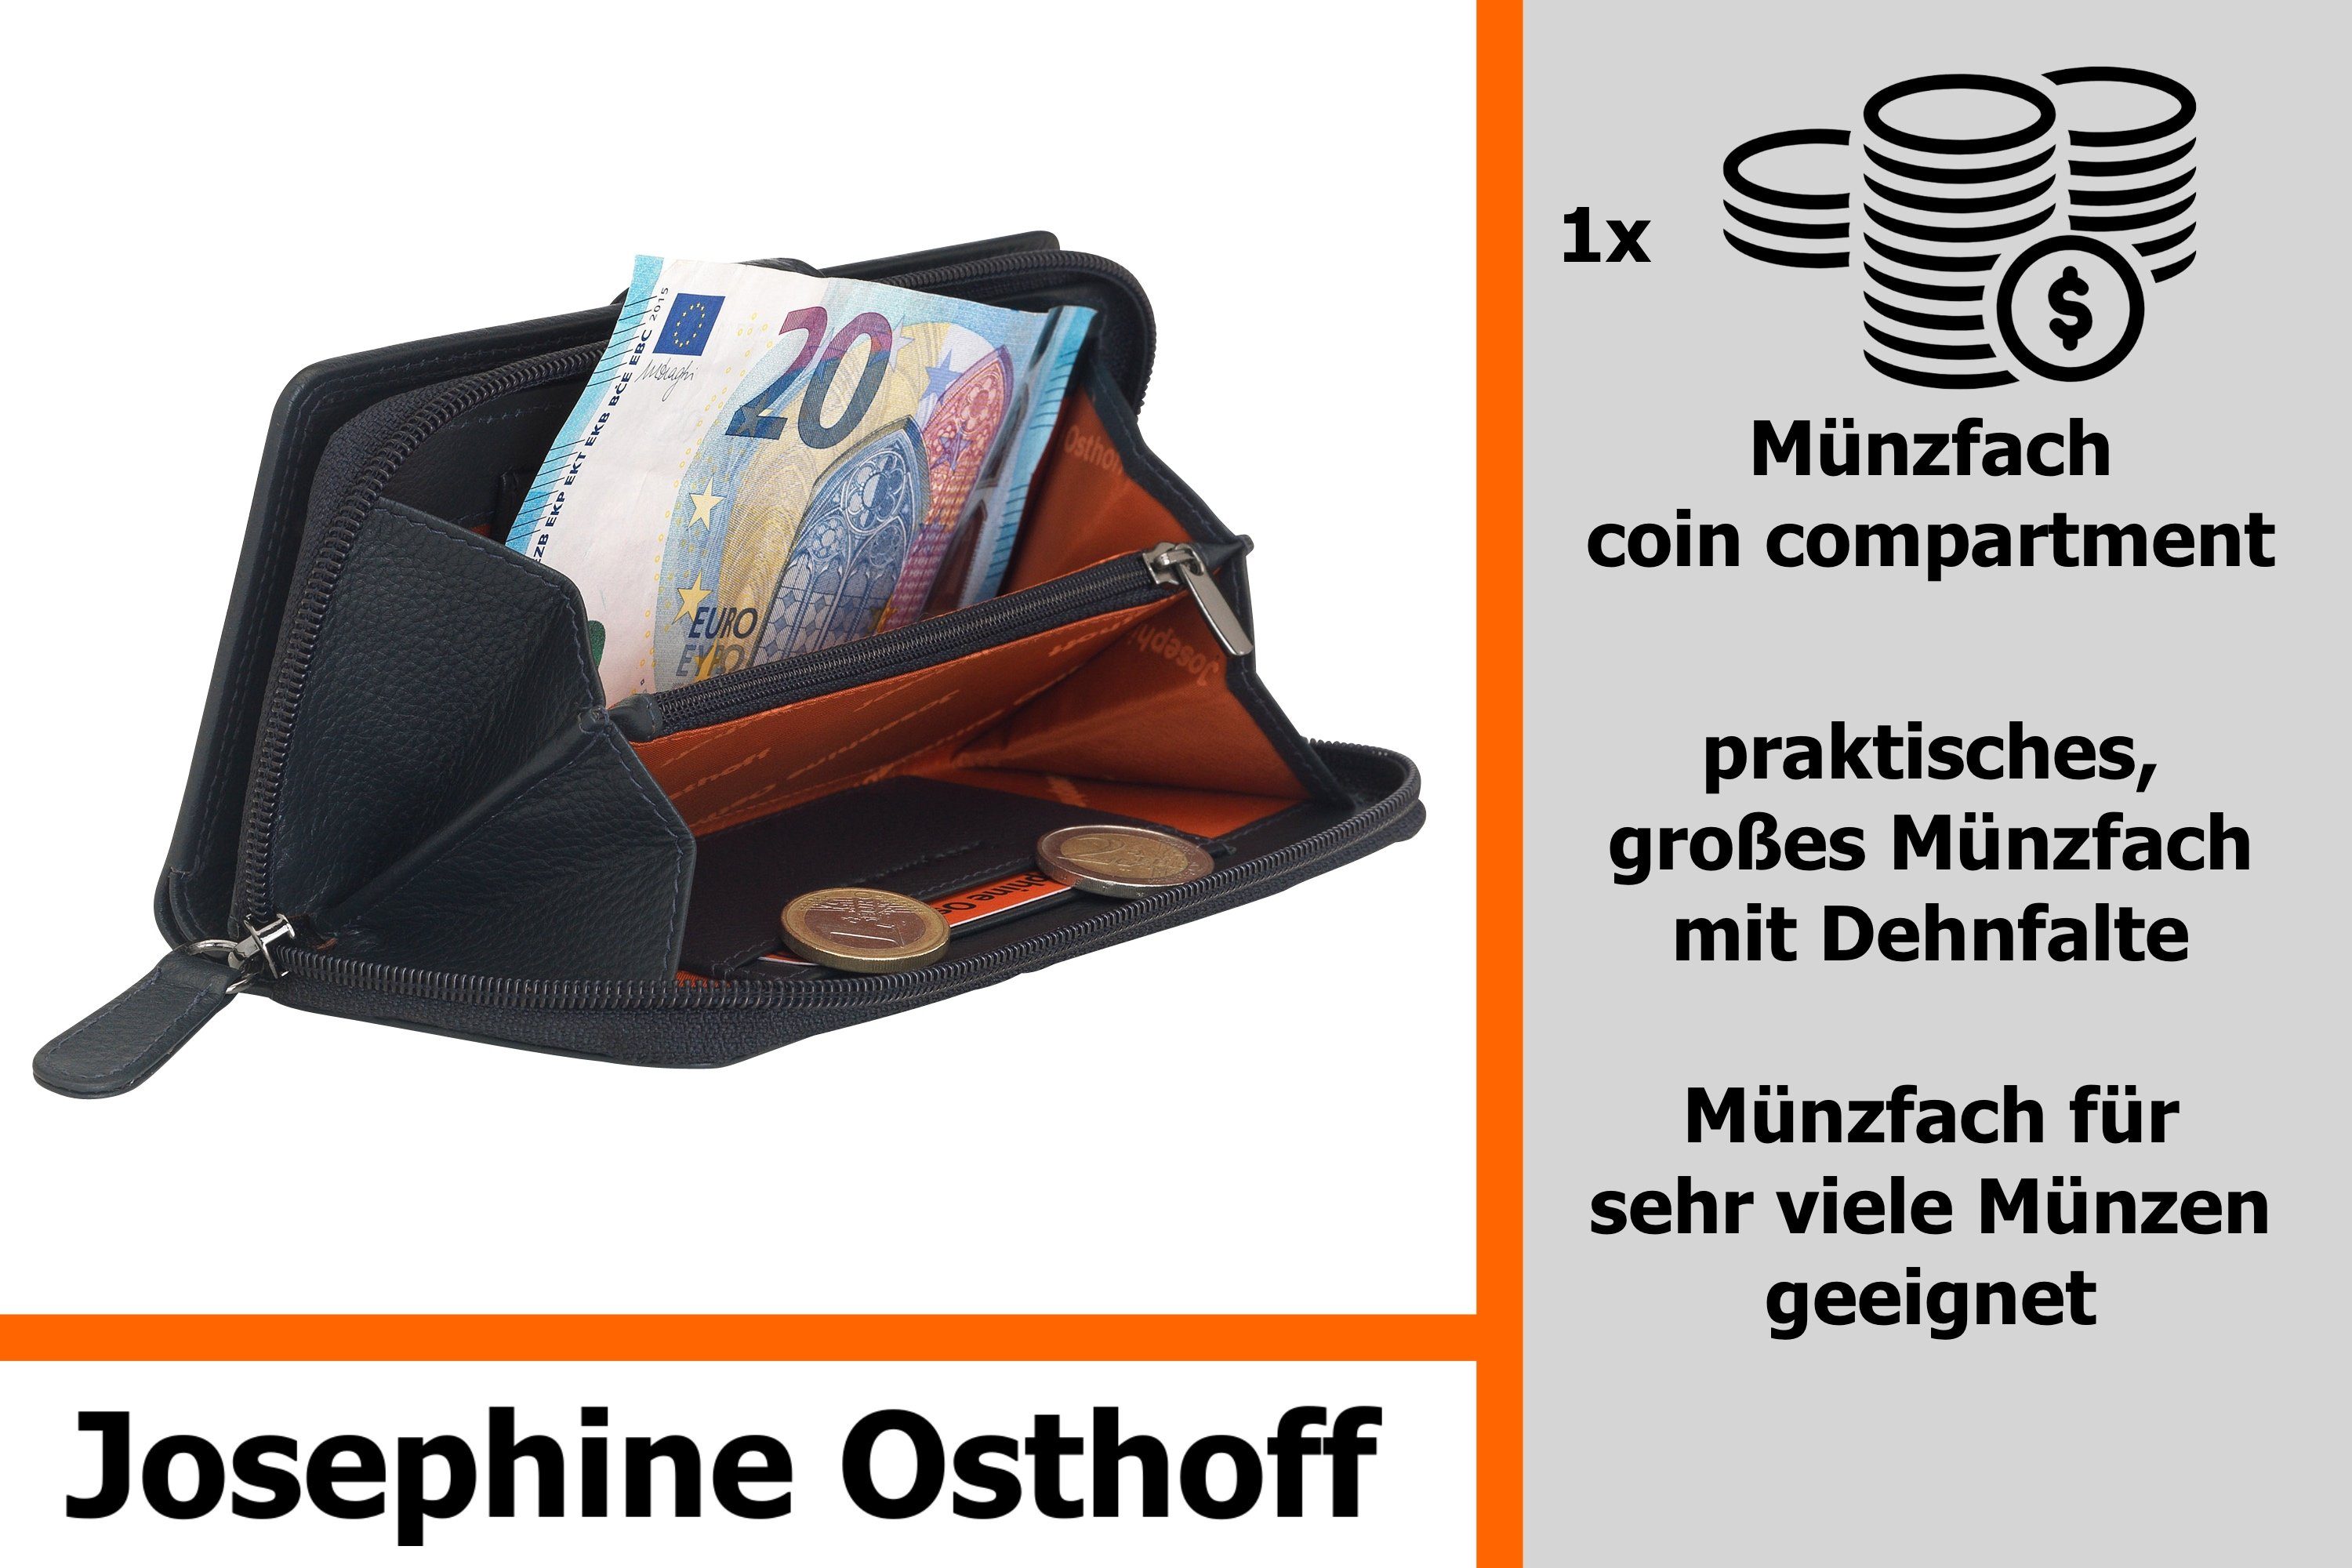 Geldbörse Bremen Josephine schwarz Geldbörse kompakt Osthoff